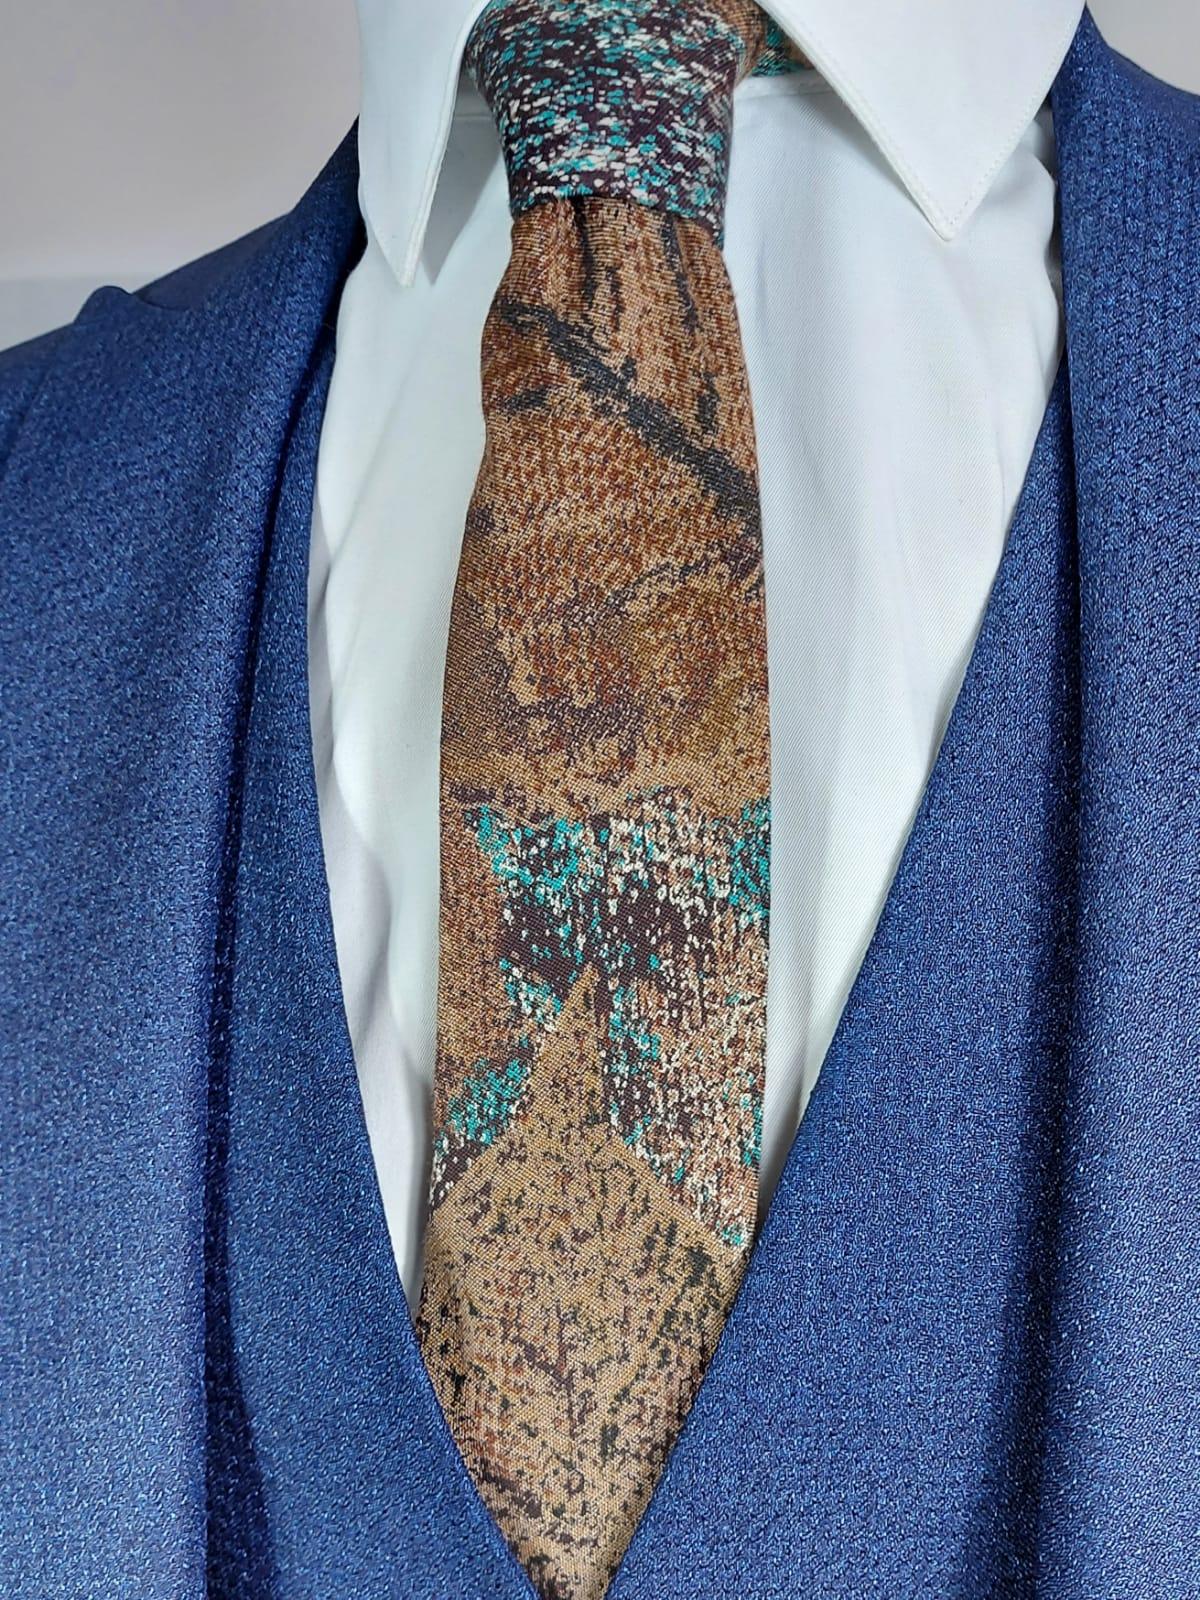 Bruine stropdas met patroon - Pomandi.com